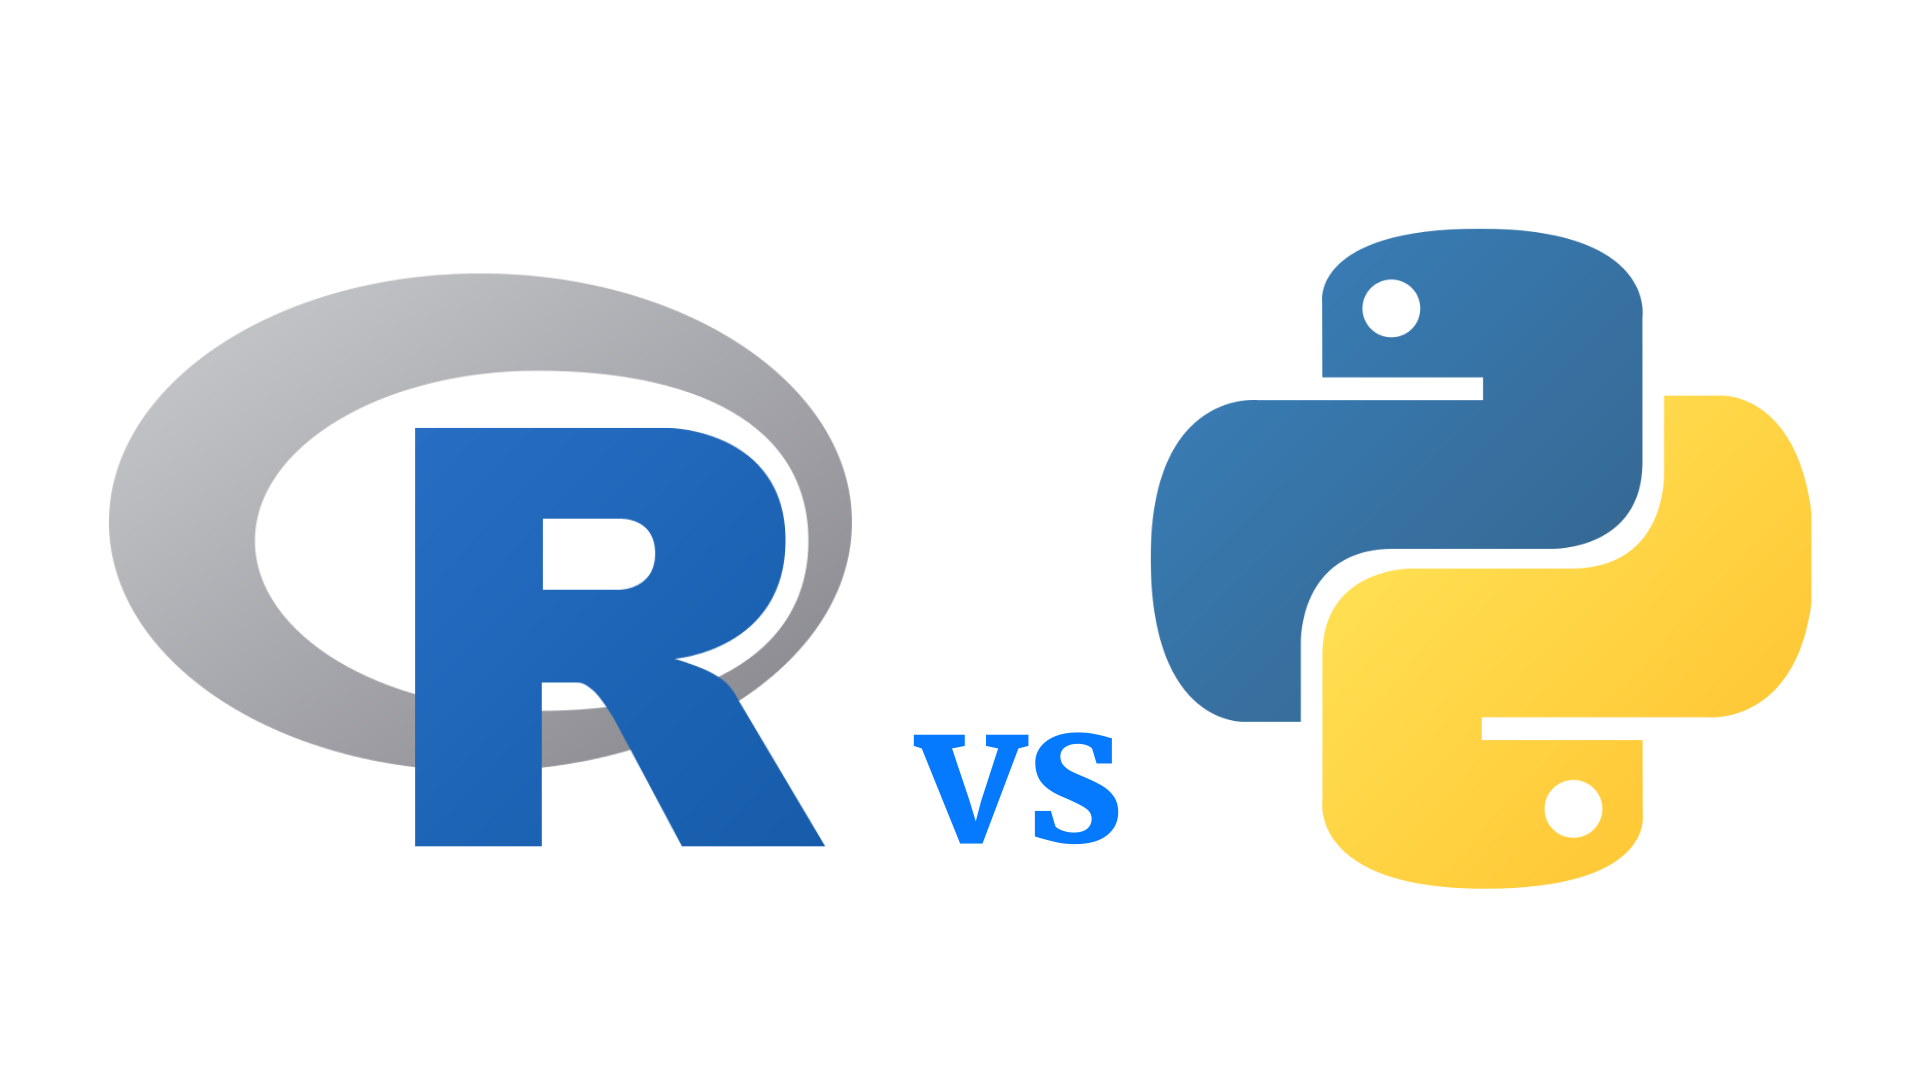 R vs Python: The Data Science language debate